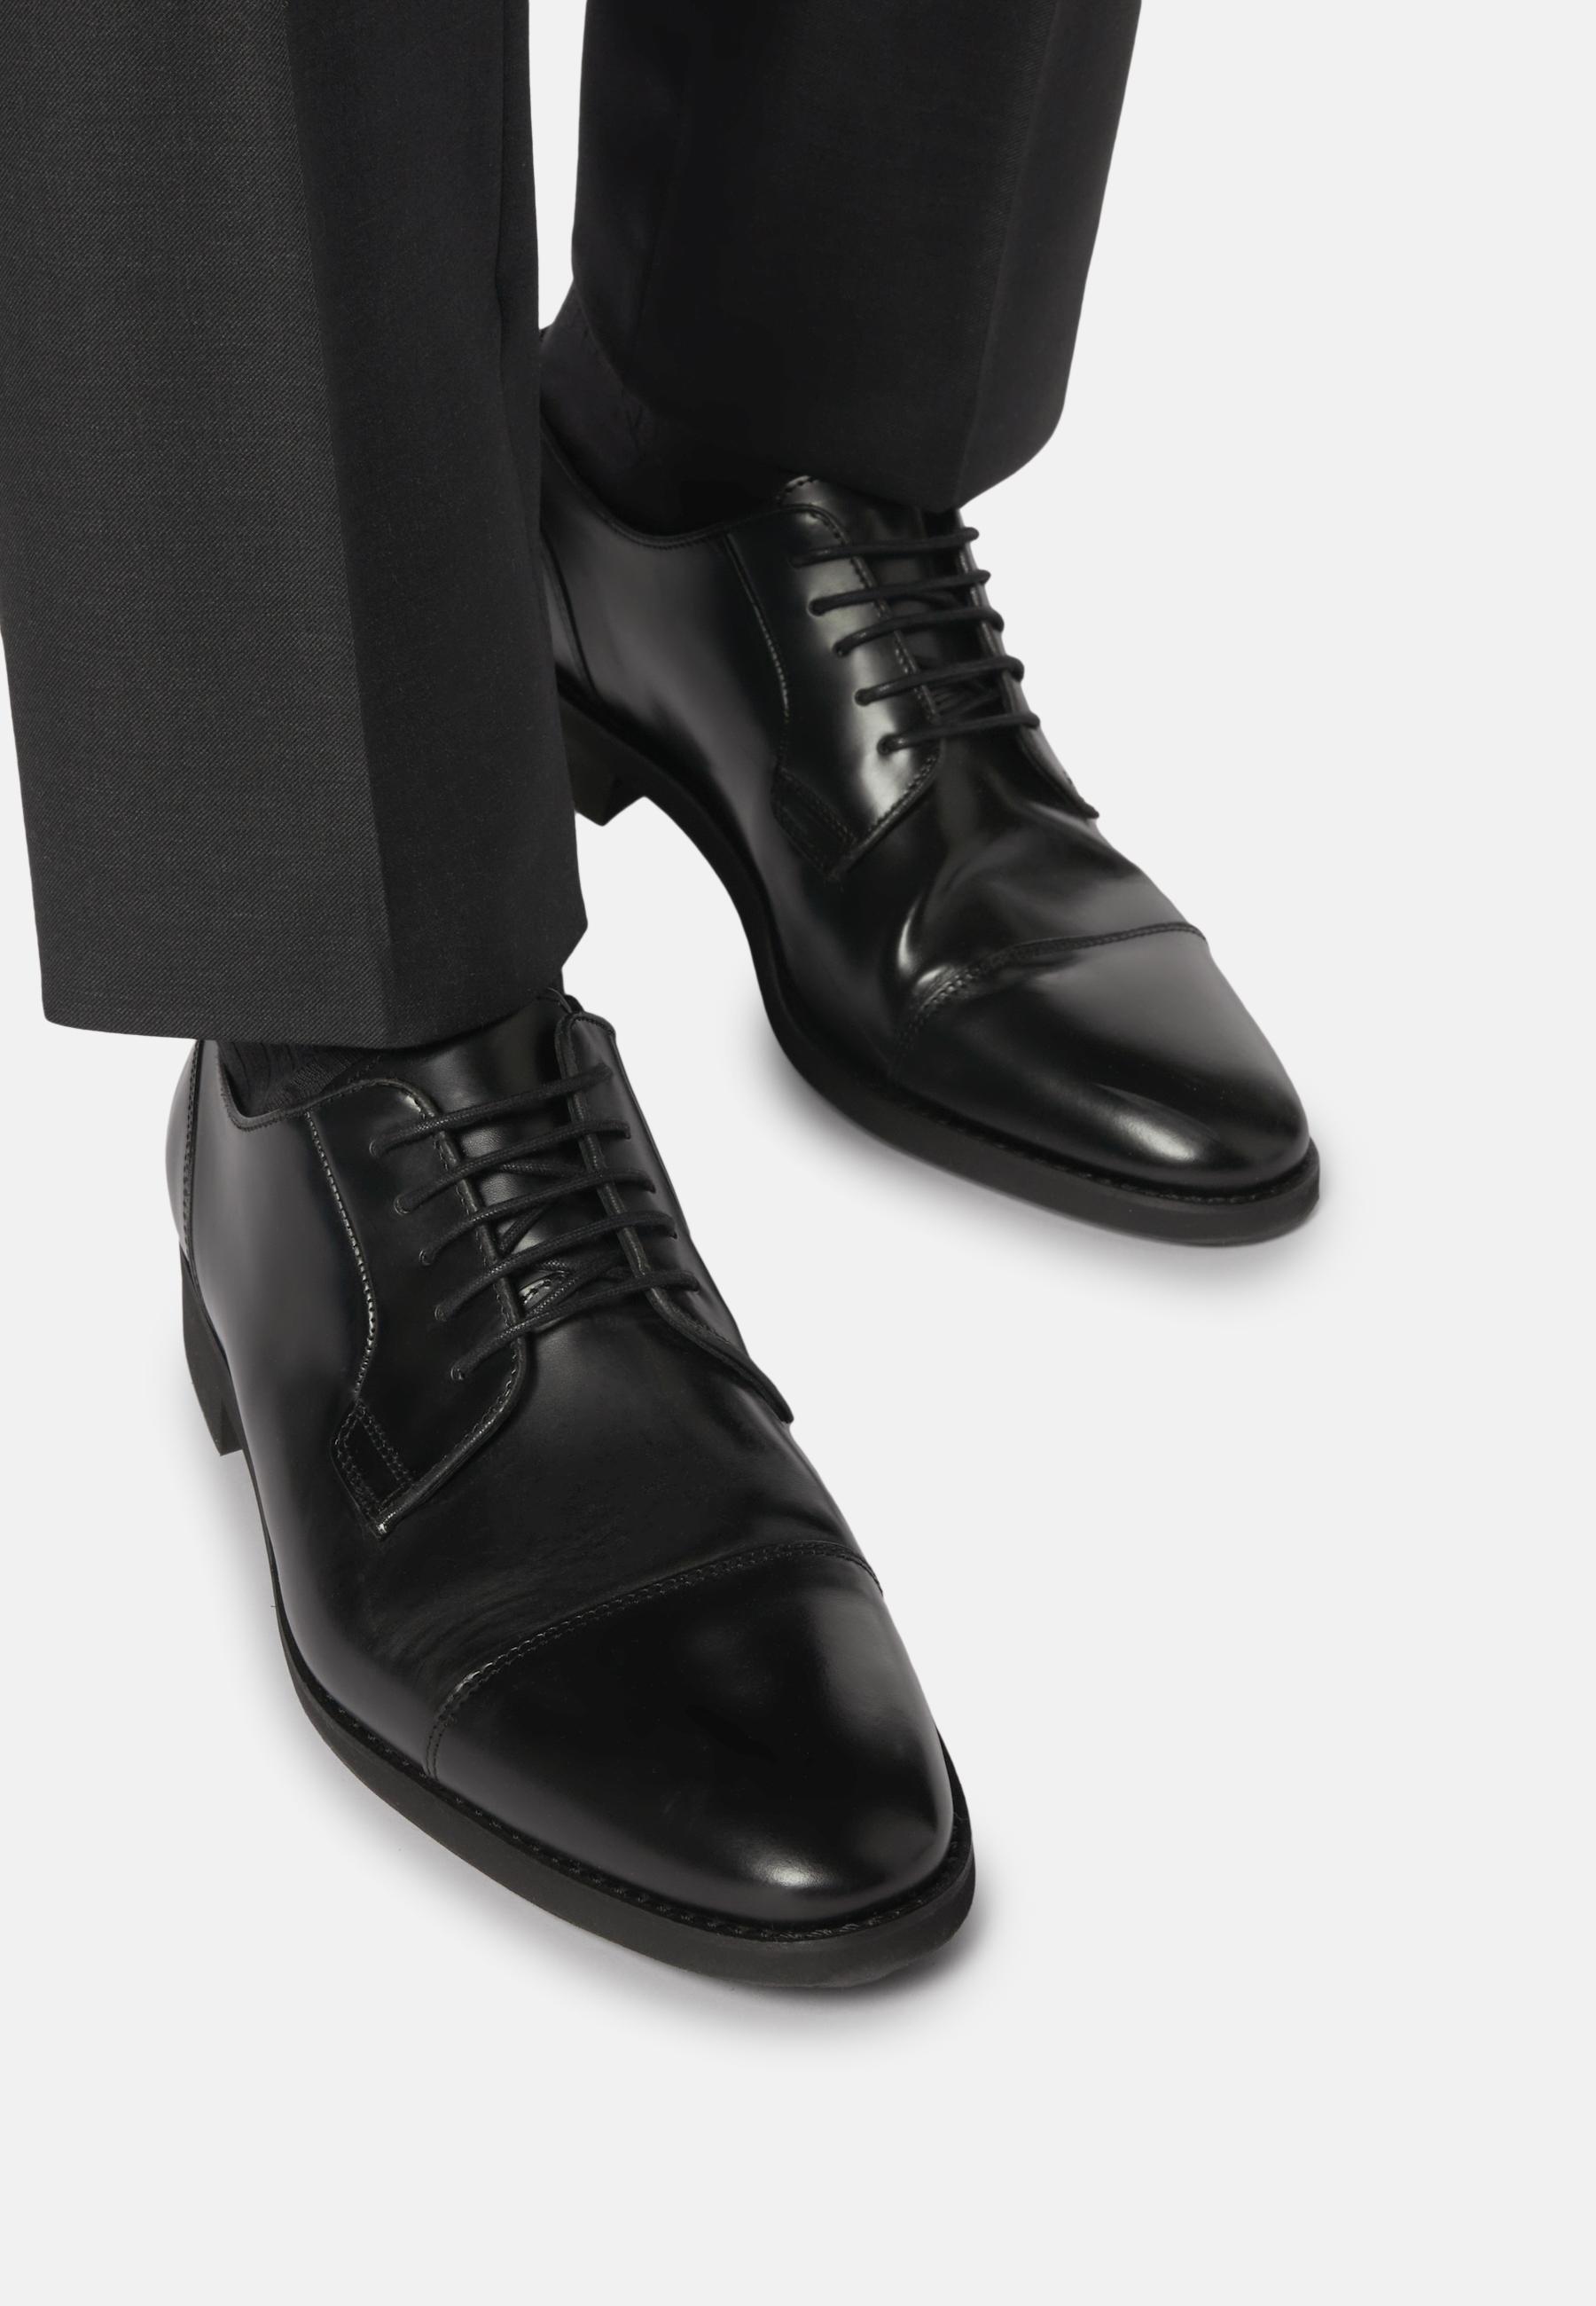 Boggi Milano - Black Leather Derby Shoes